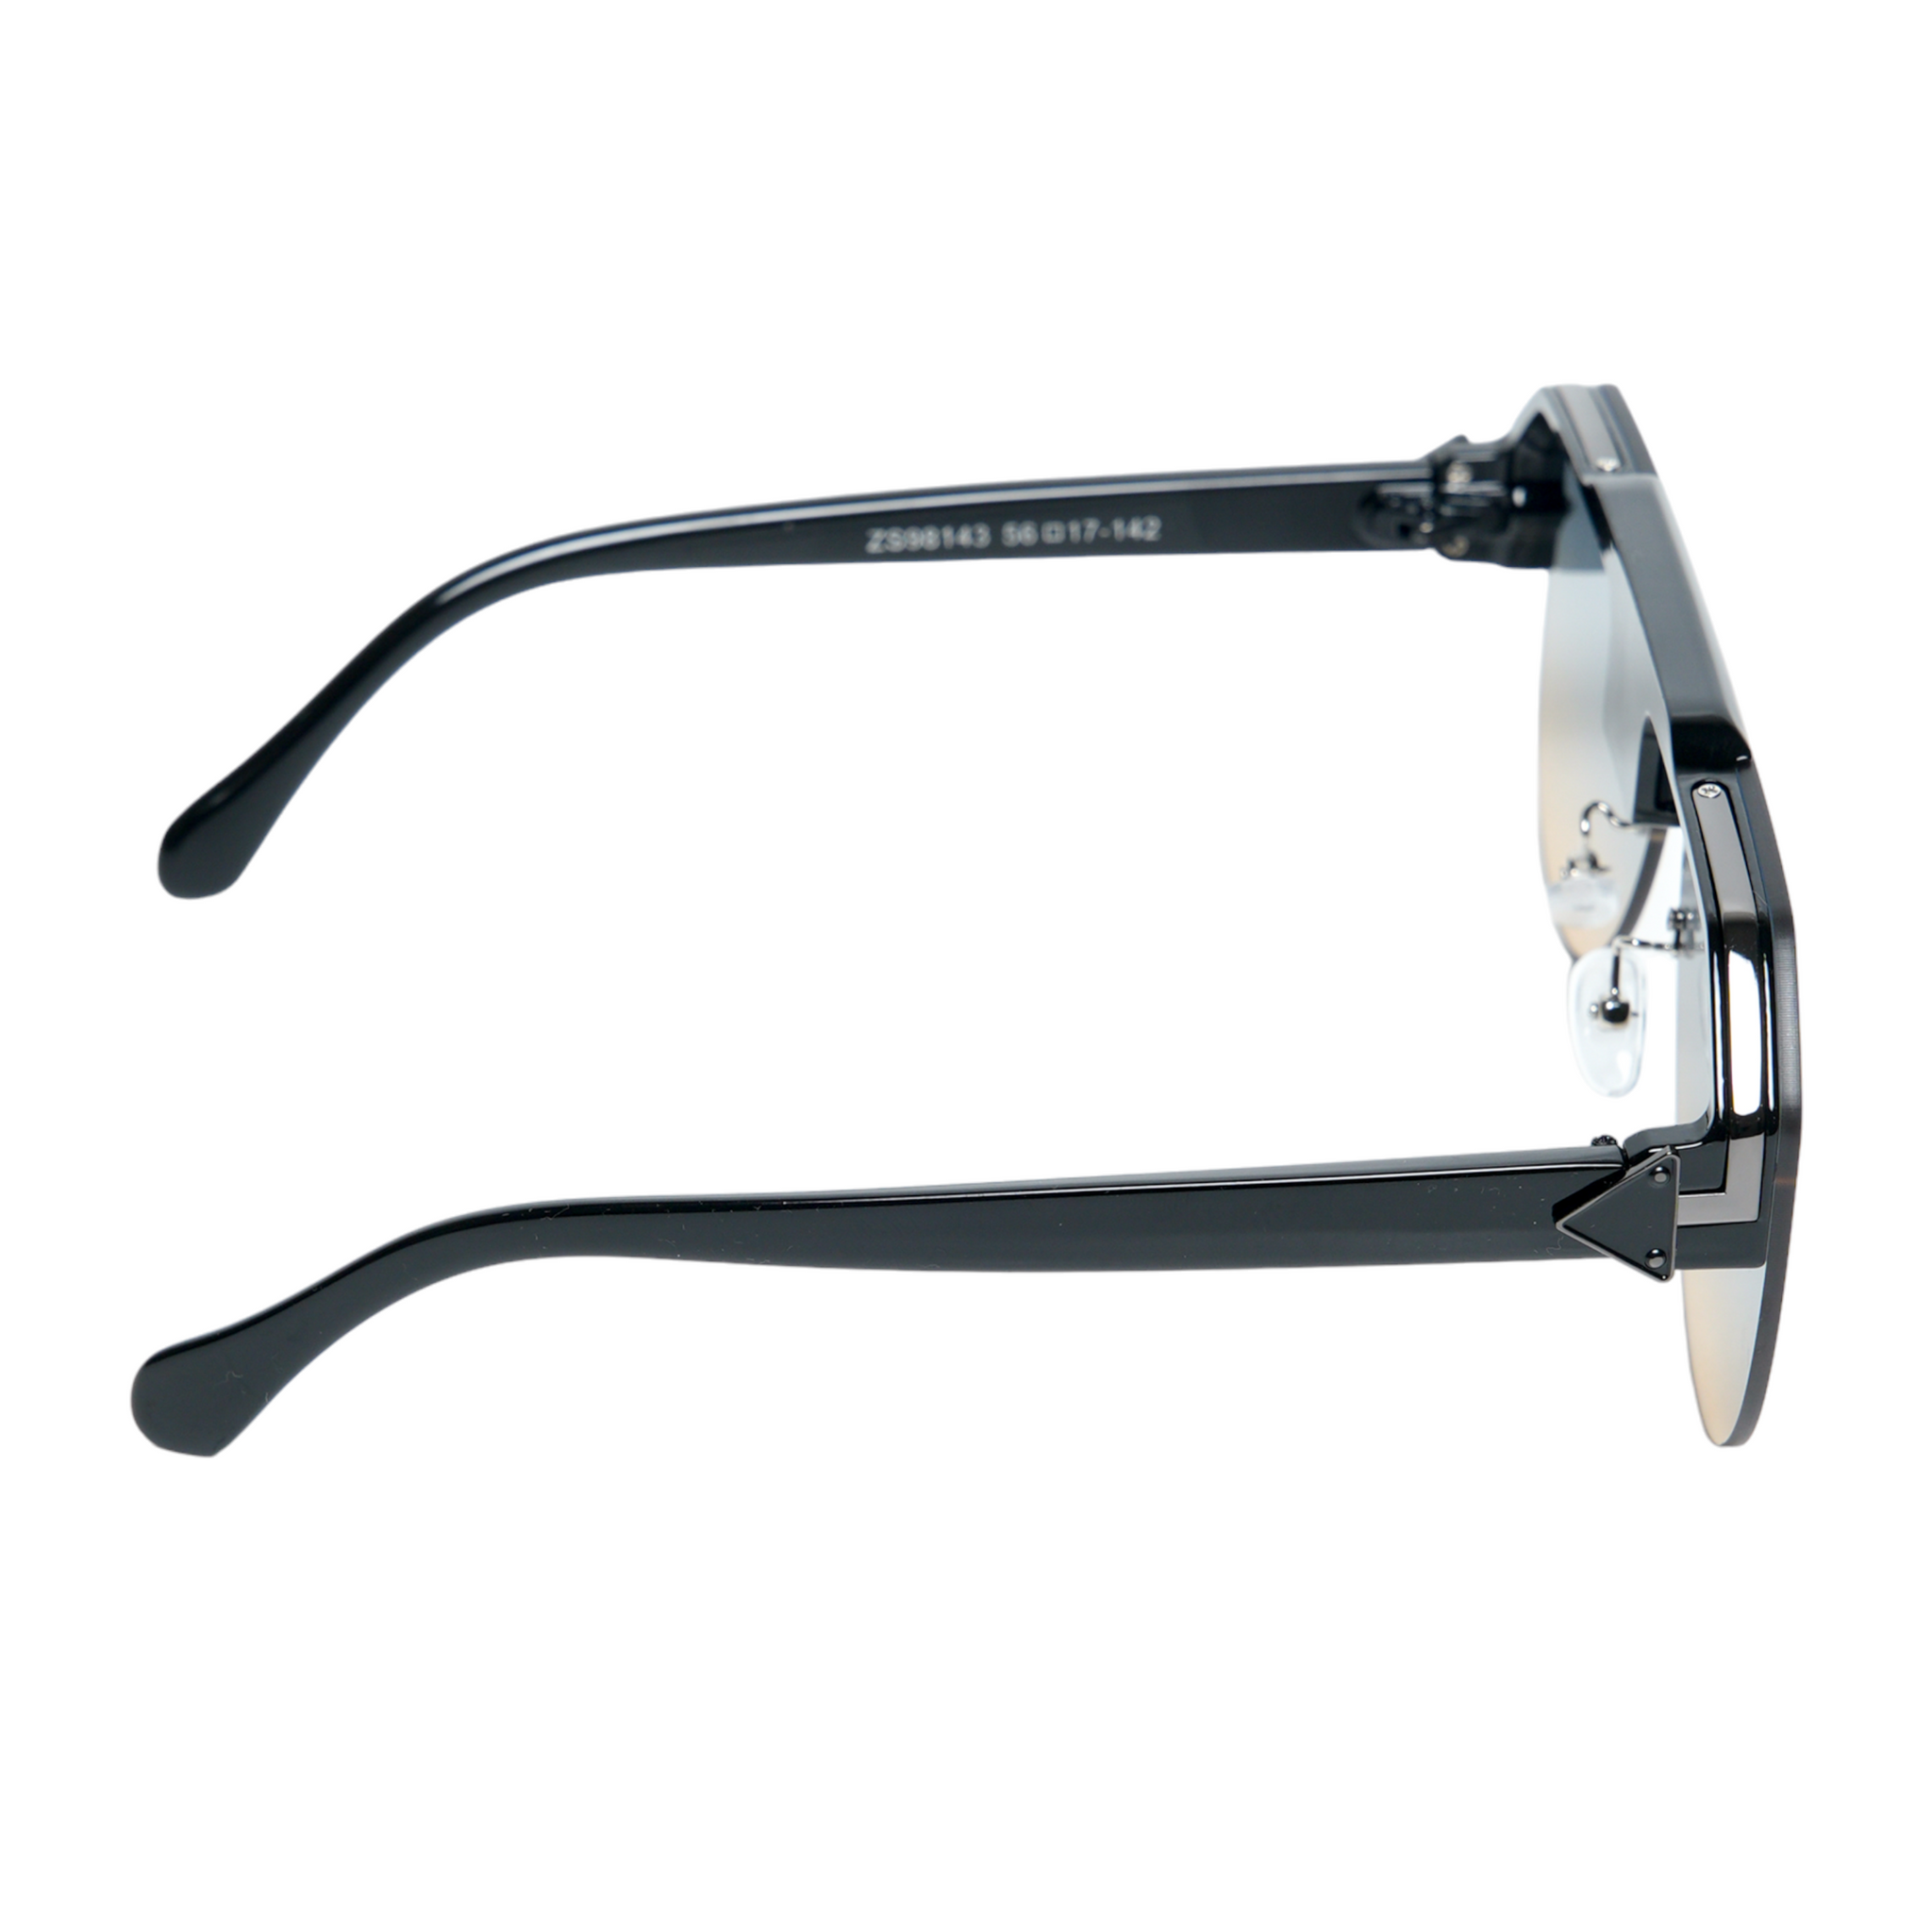 Chokore Half-frame Gradient Aviators Sunglasses(Blue & Black)